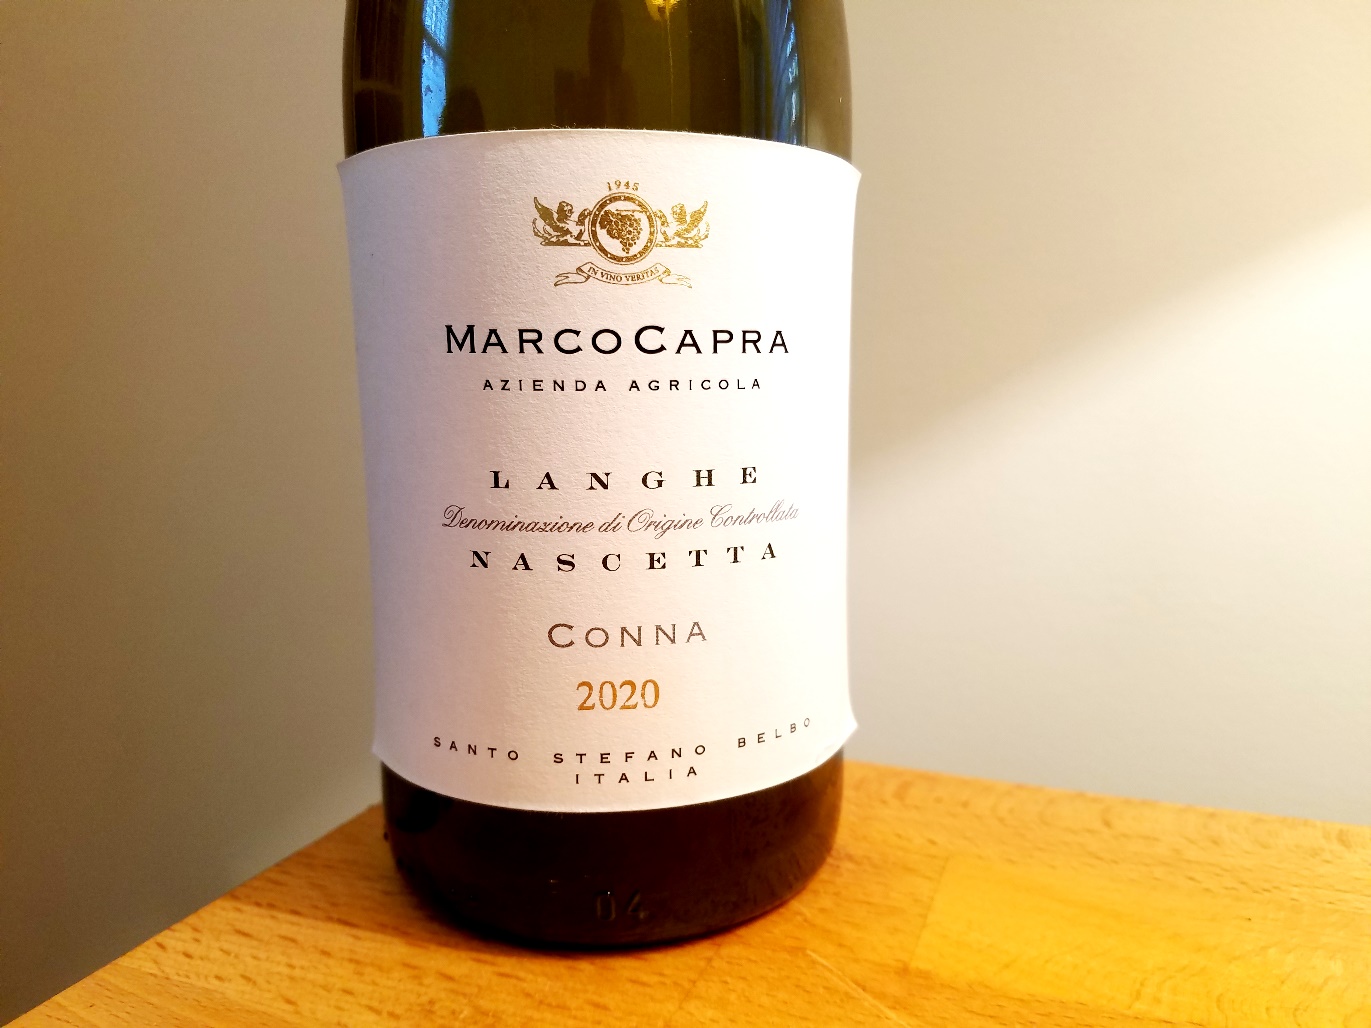 Marco Capra Azienda Agricola, Conna Langhe Nascetta 2020, Piedmont, Italy, Wine Casual